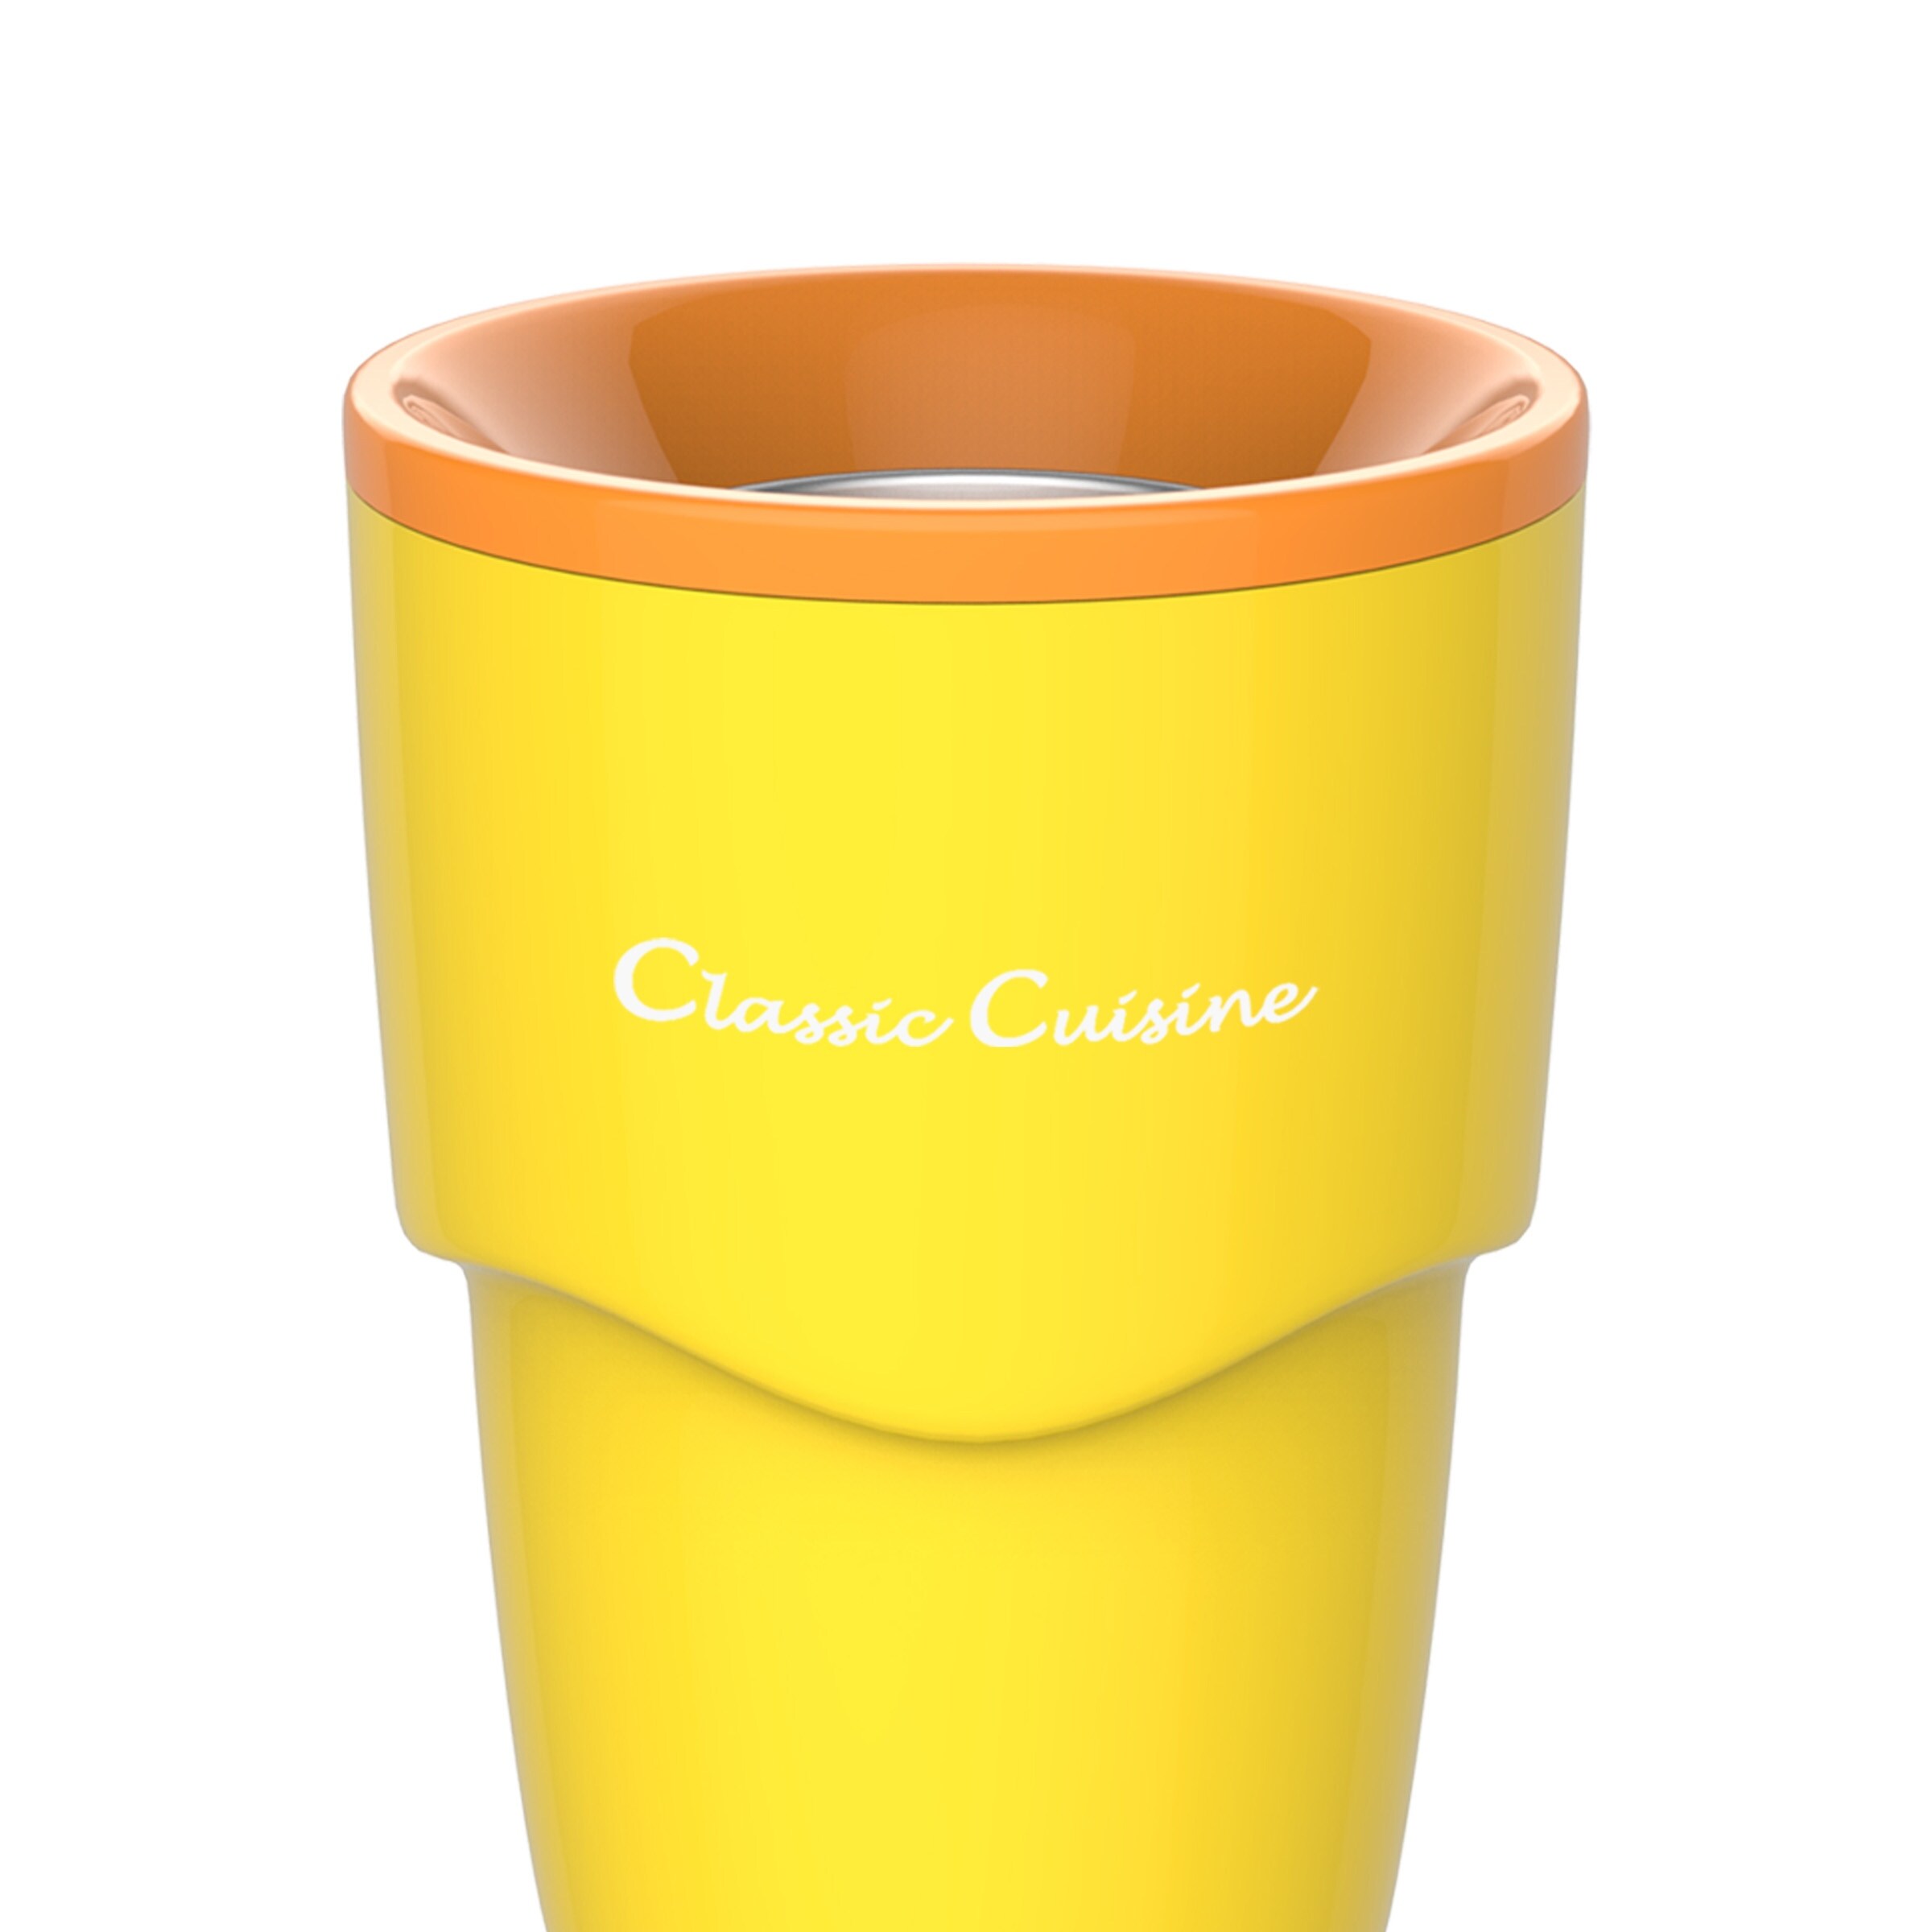 Ice Cream Cone Mug with Stirrer - Ceramic - Pink - Yellow - Orange